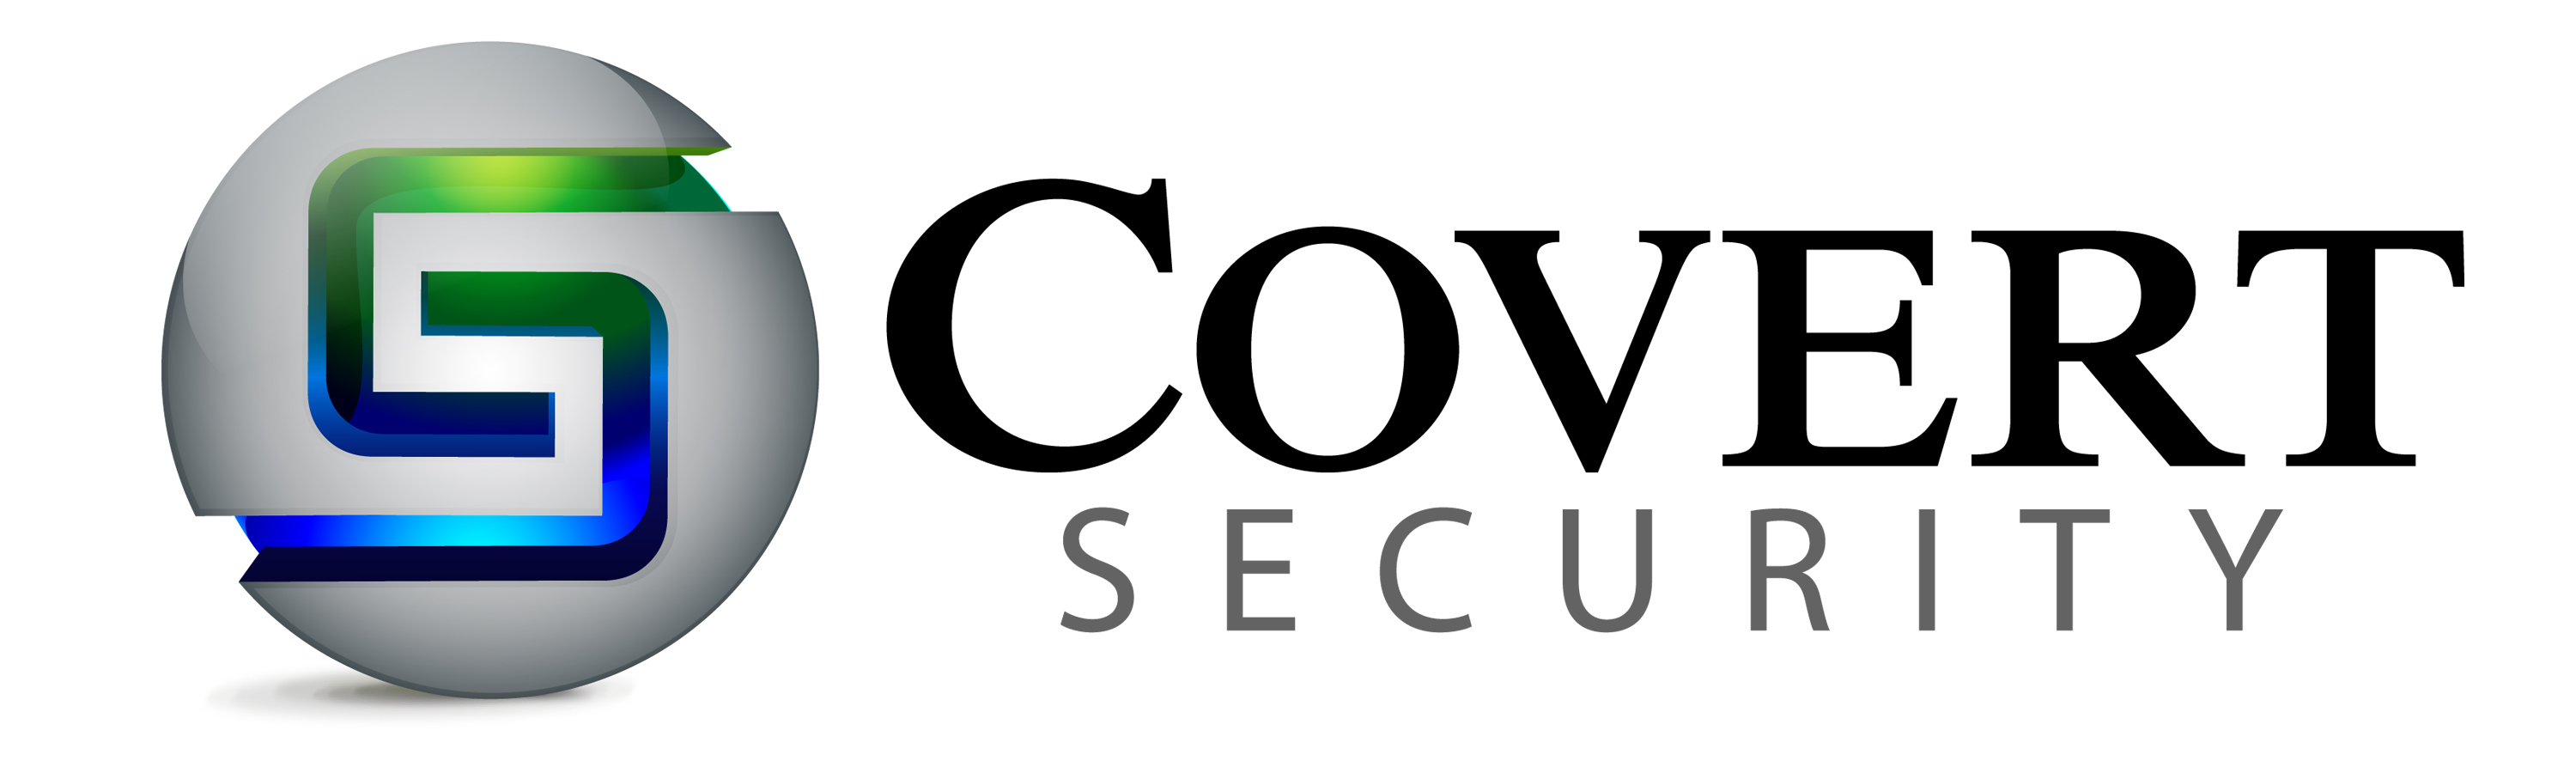 Covert Security, LLC Logo